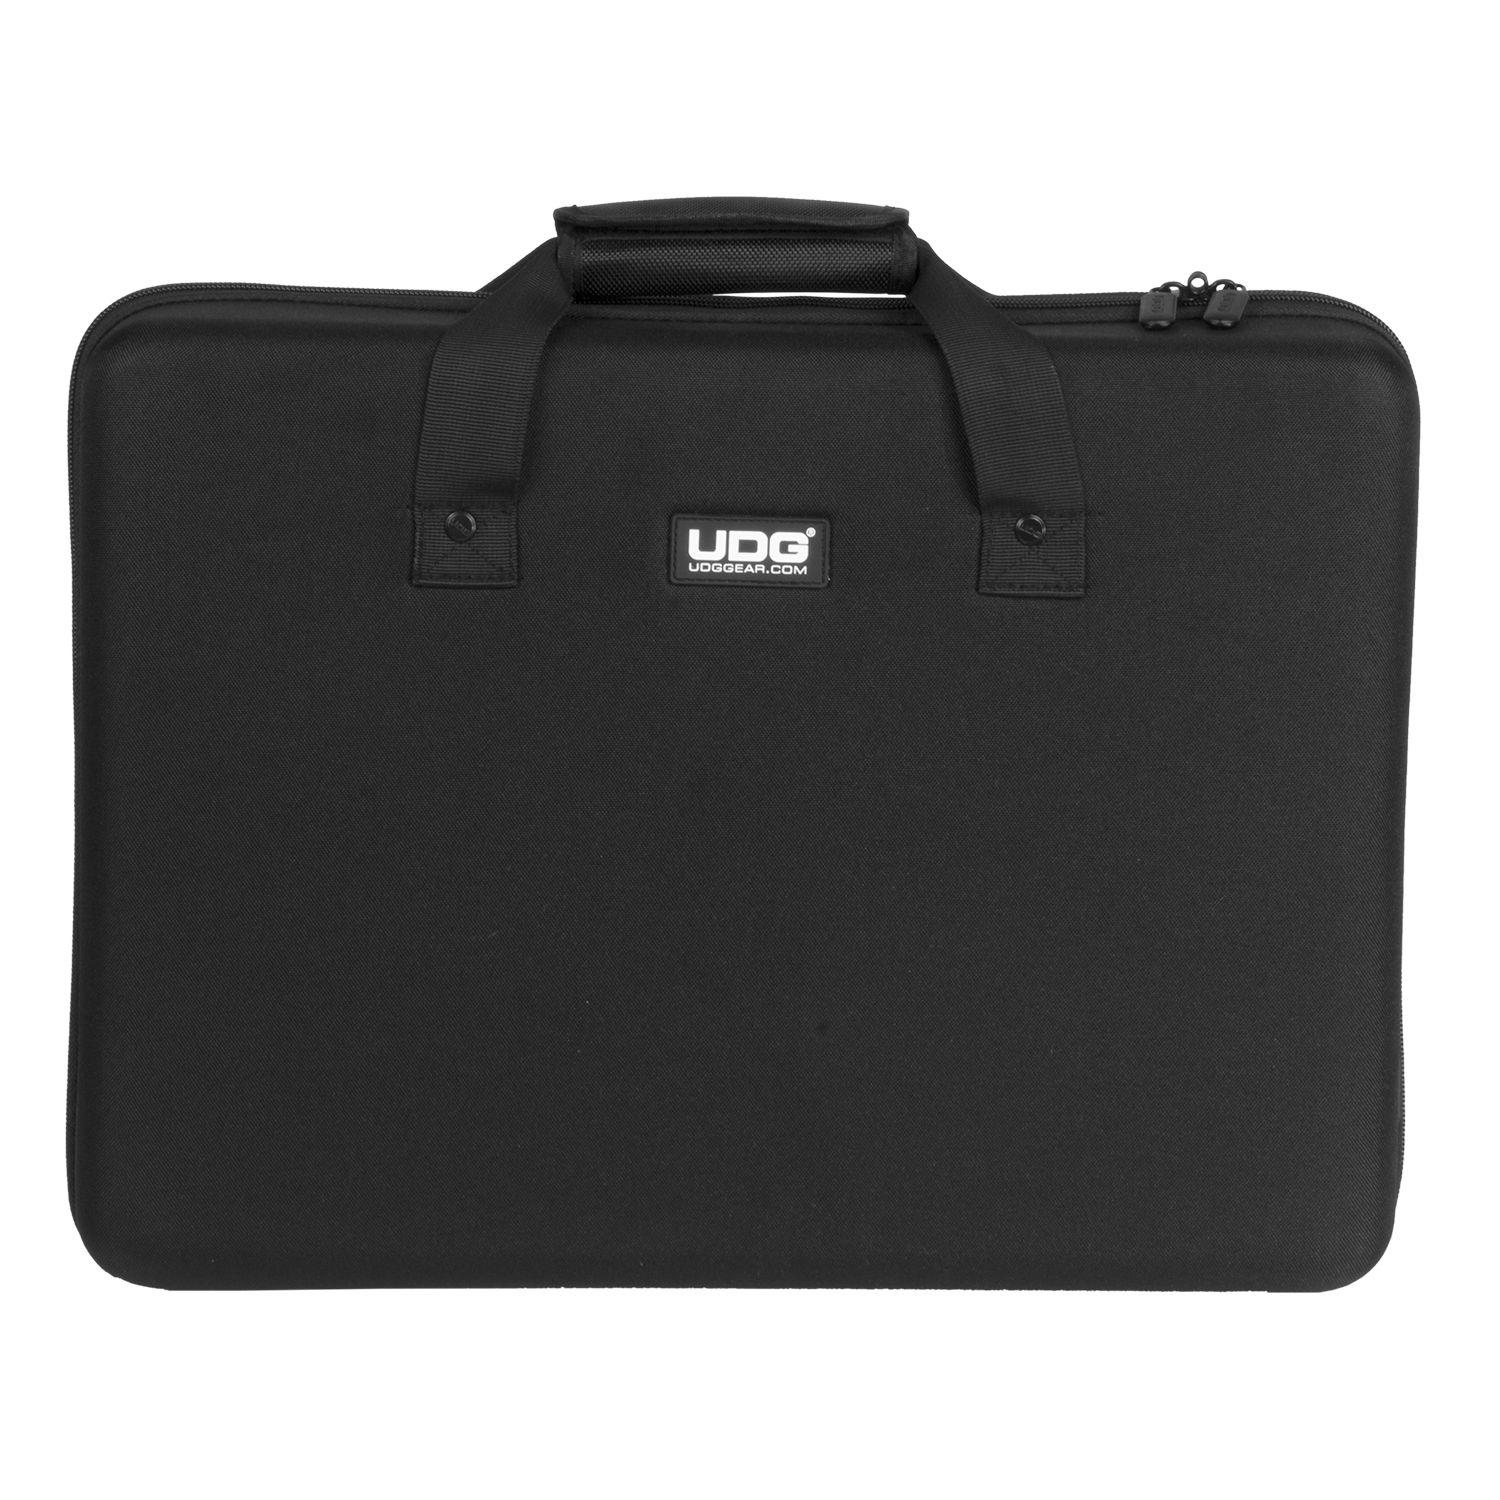 UDG Creator Controller Hardcase Medium Black MK2 upright